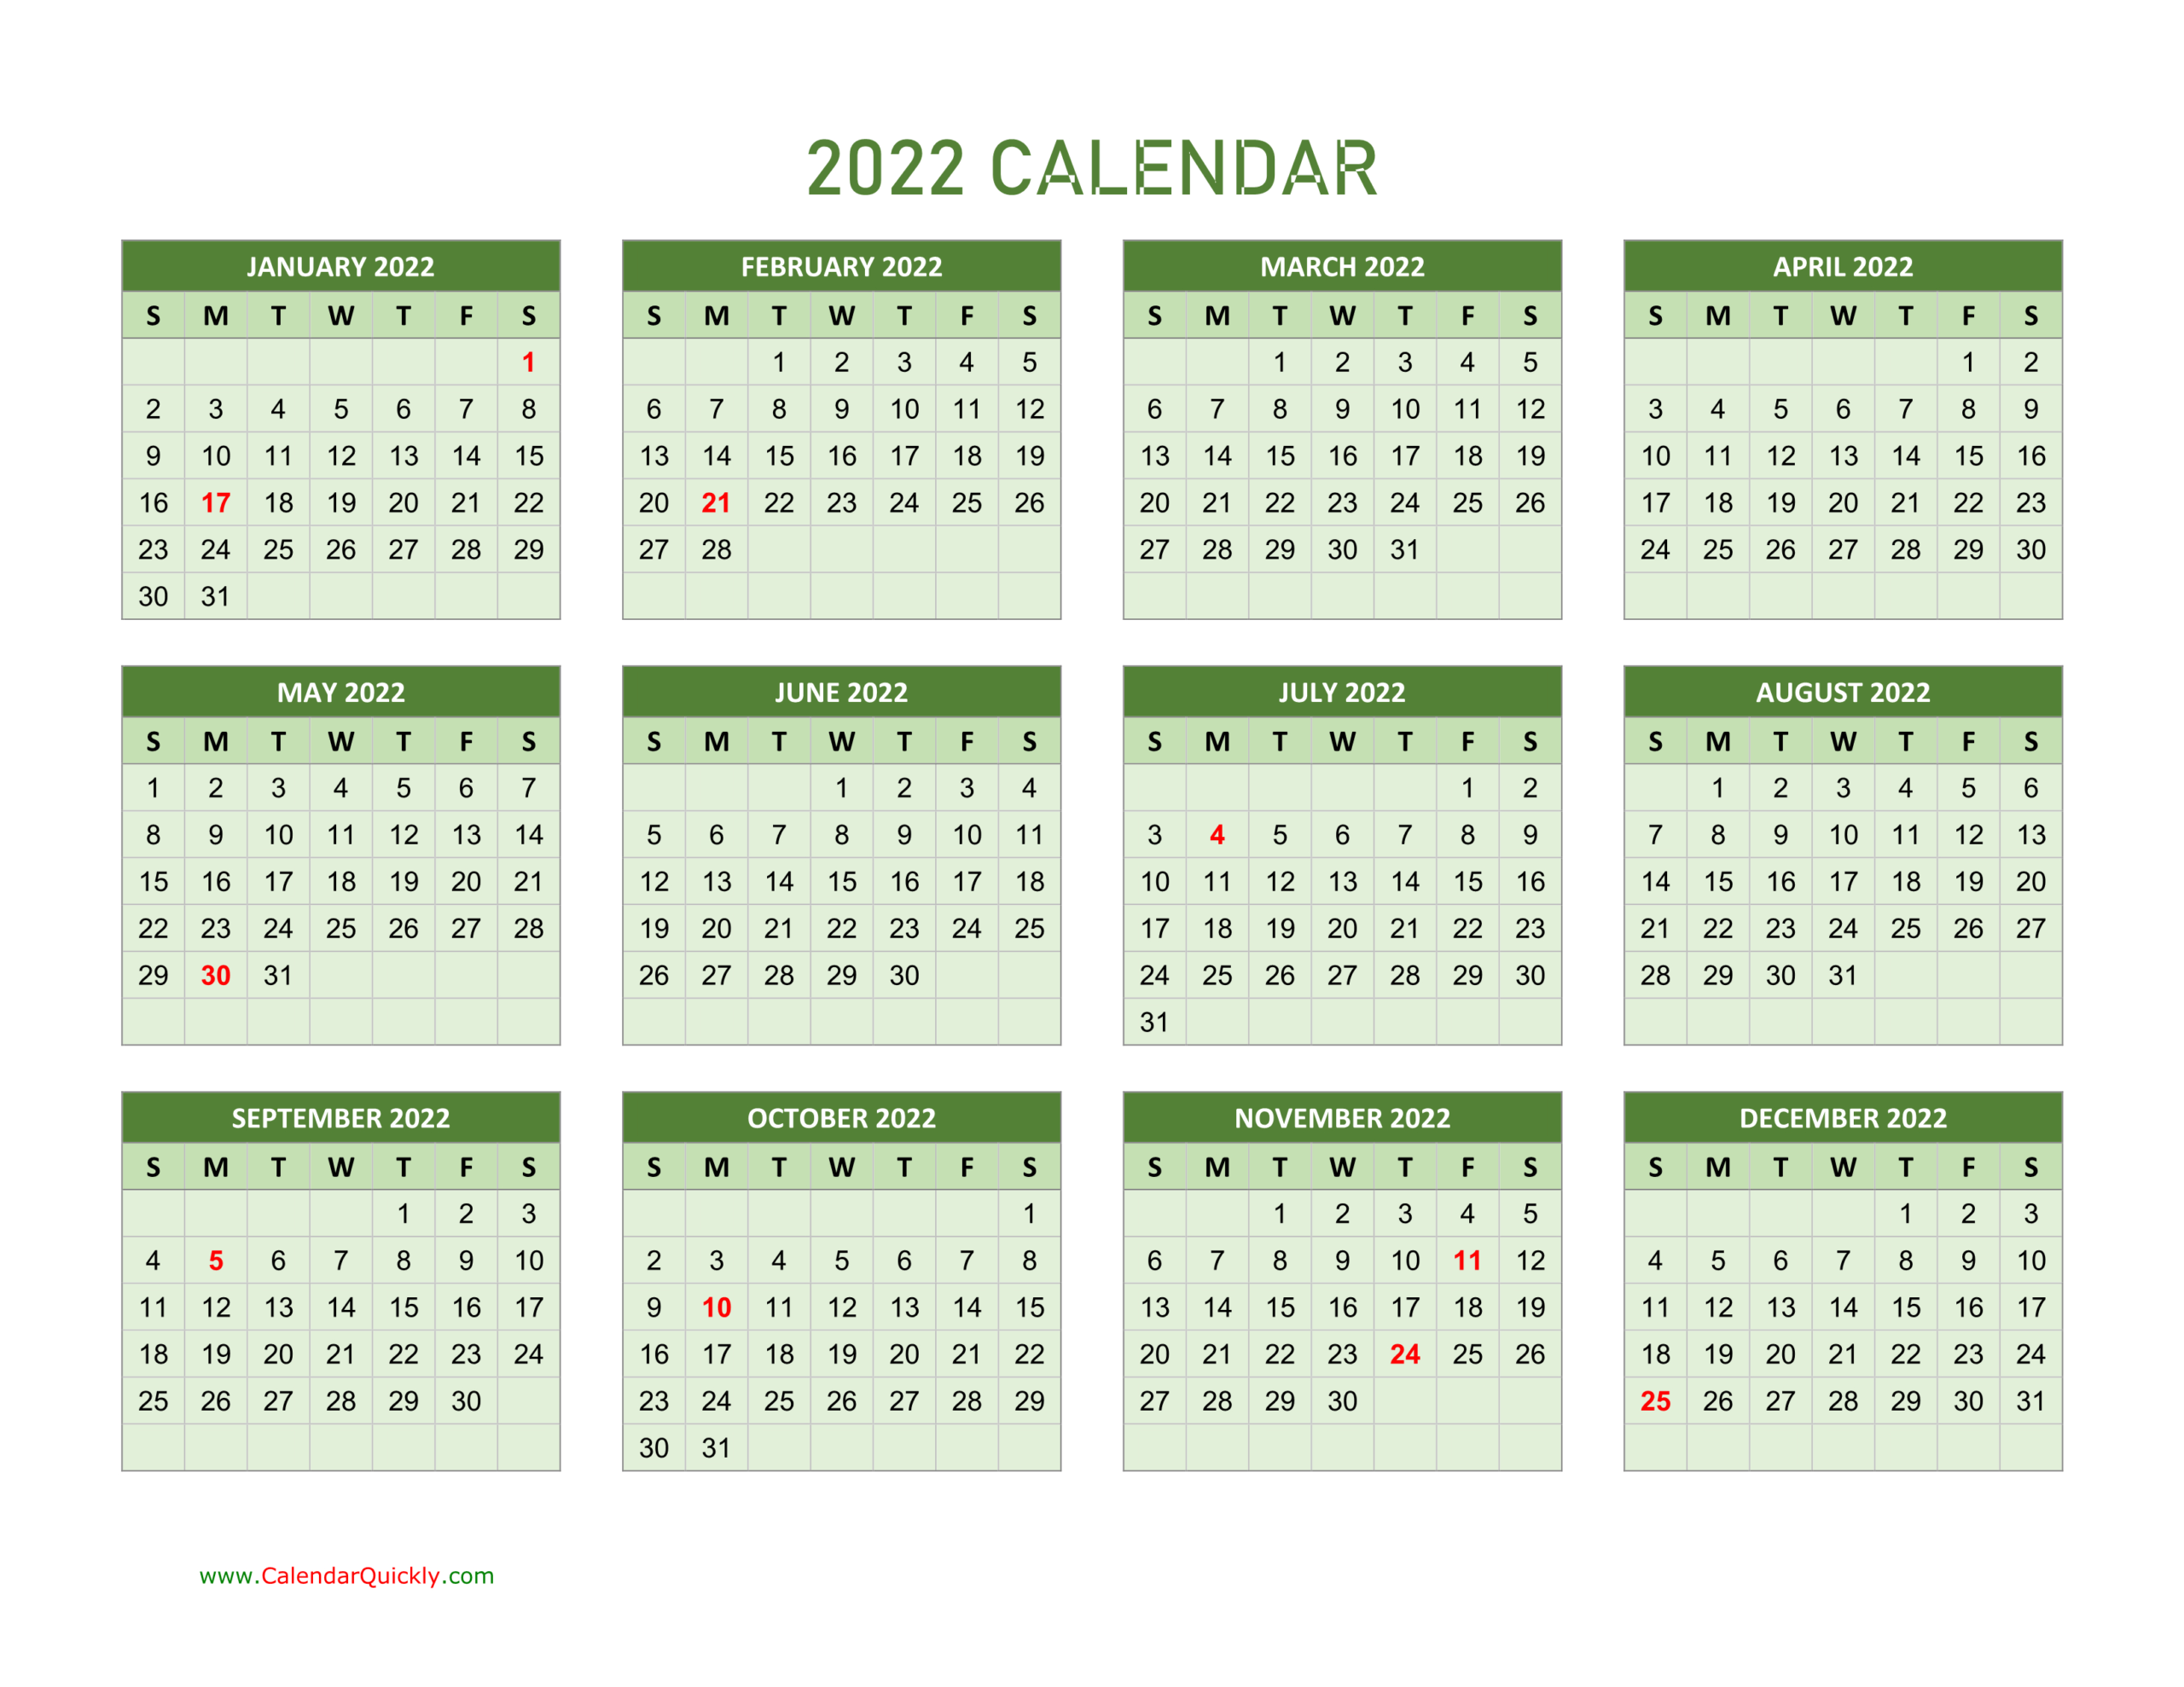 Yearly Calendar 2022 | Calendar Quickly